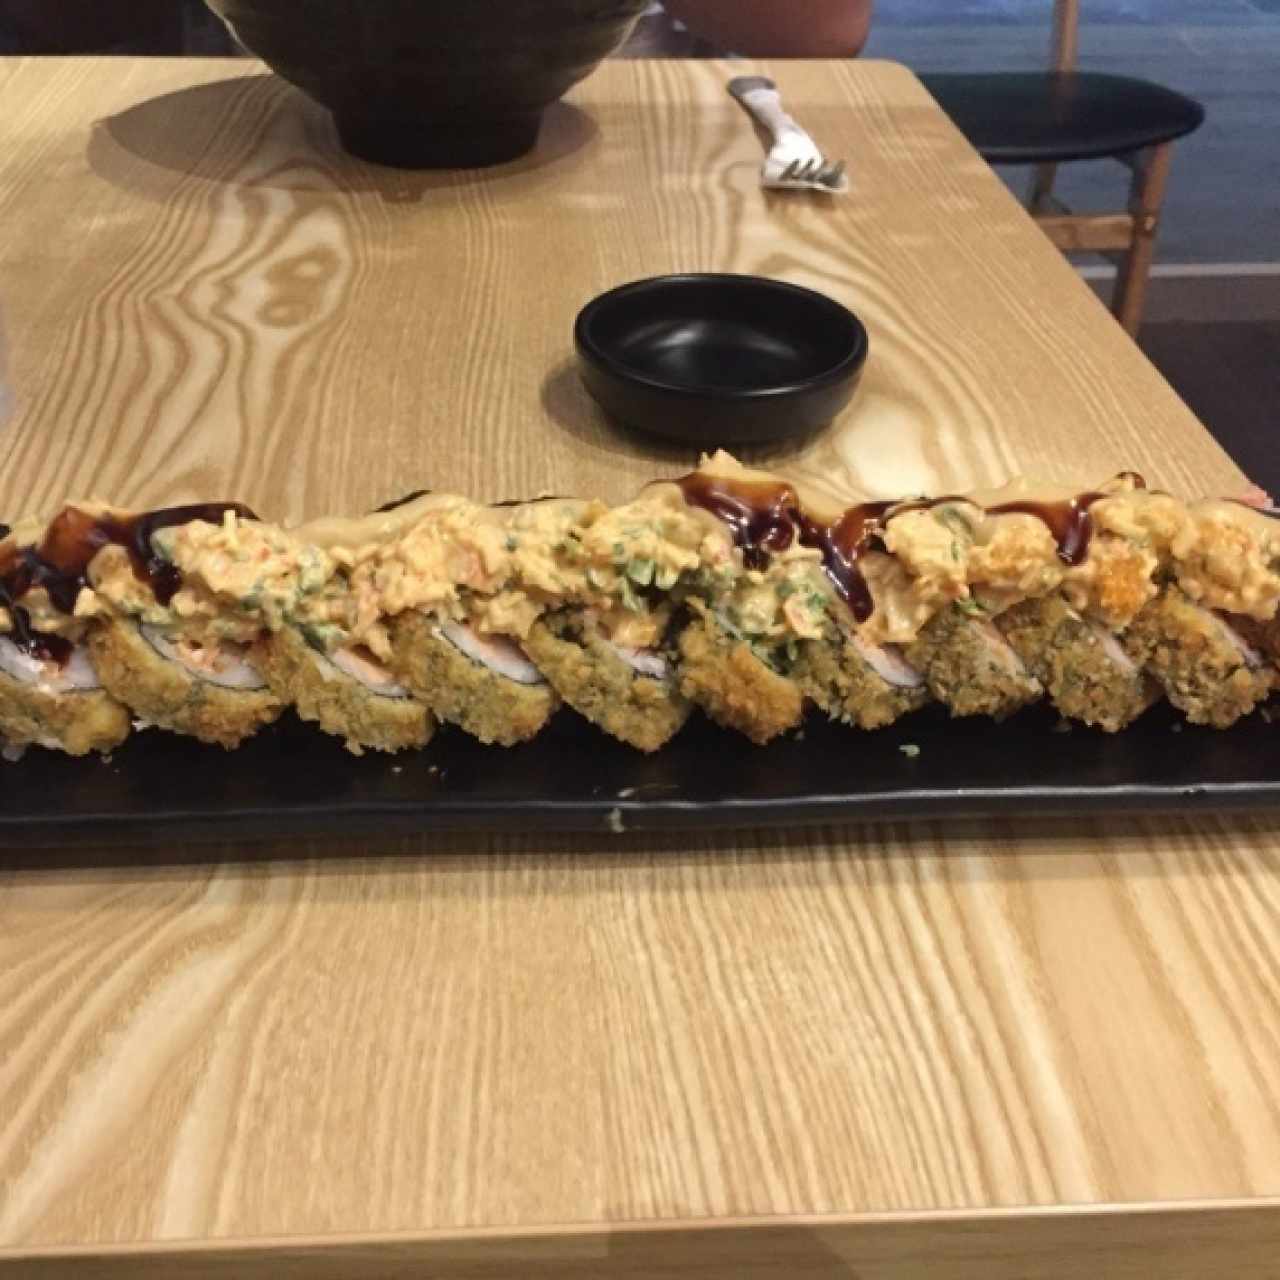 Sushi rolls - Tiger roll